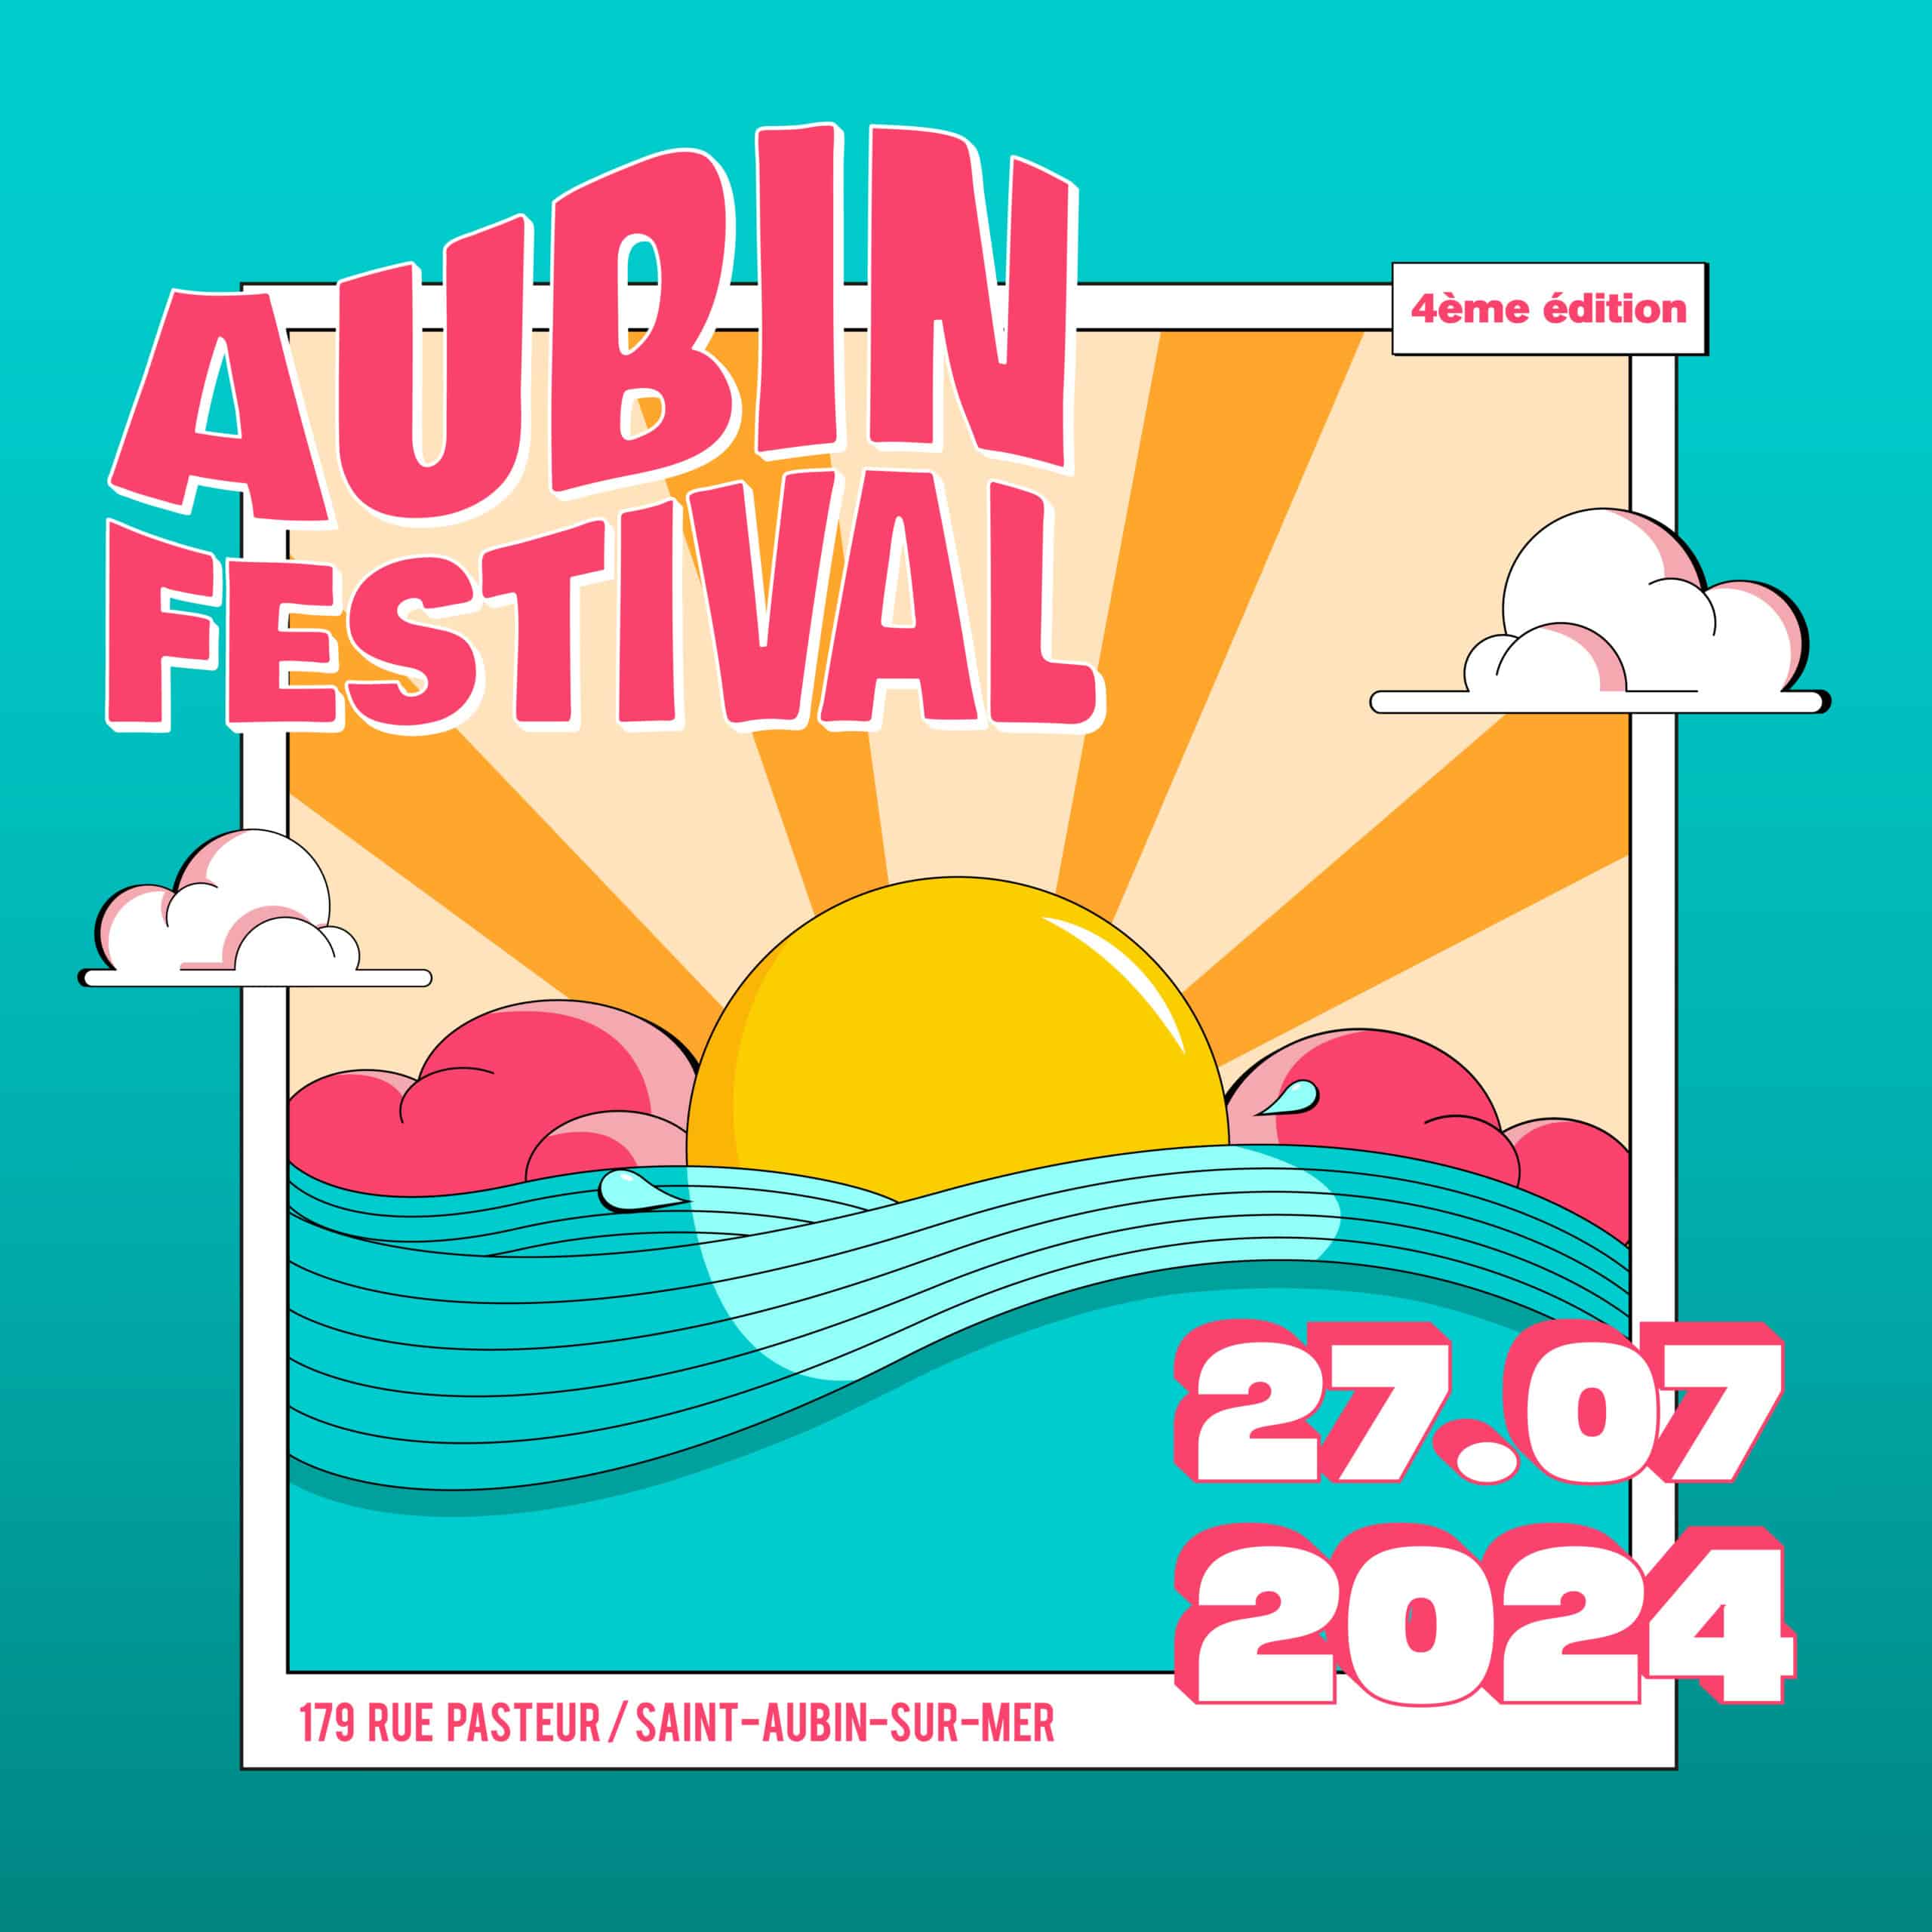 Aubin Festival 27-07-2024